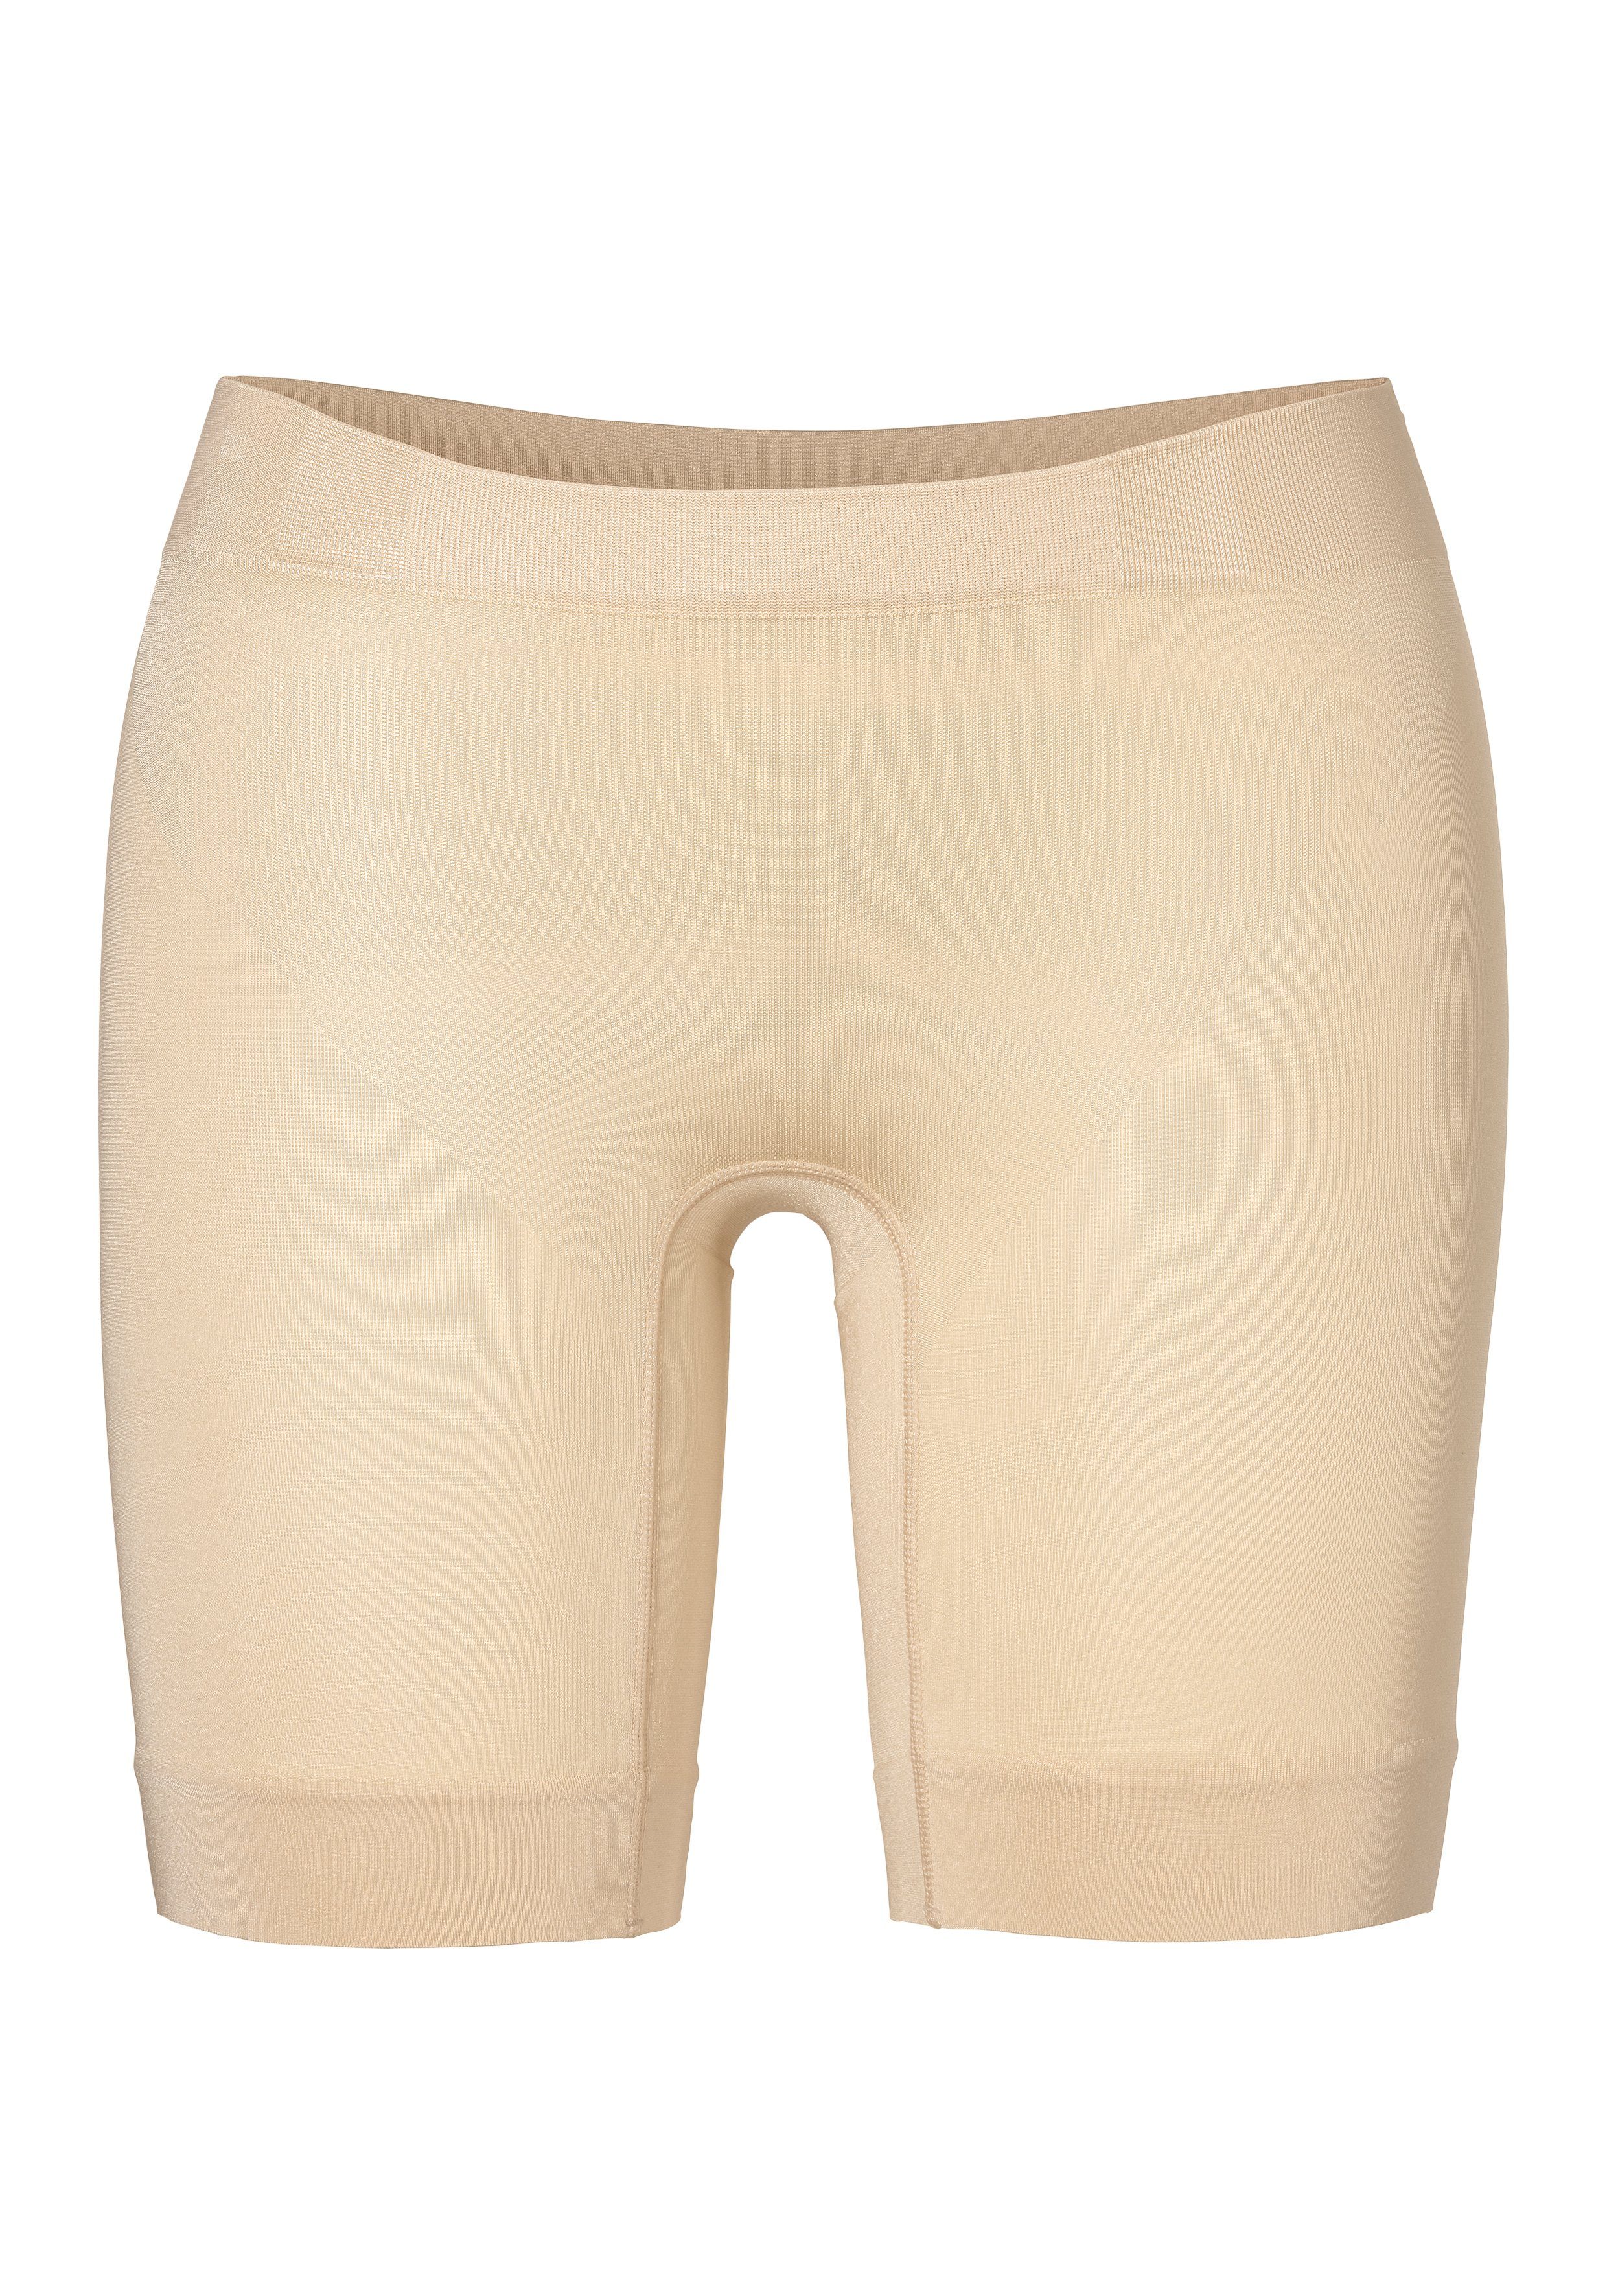 Schiesser Shapinghose Seamless-Shorts kaufen | OTTO